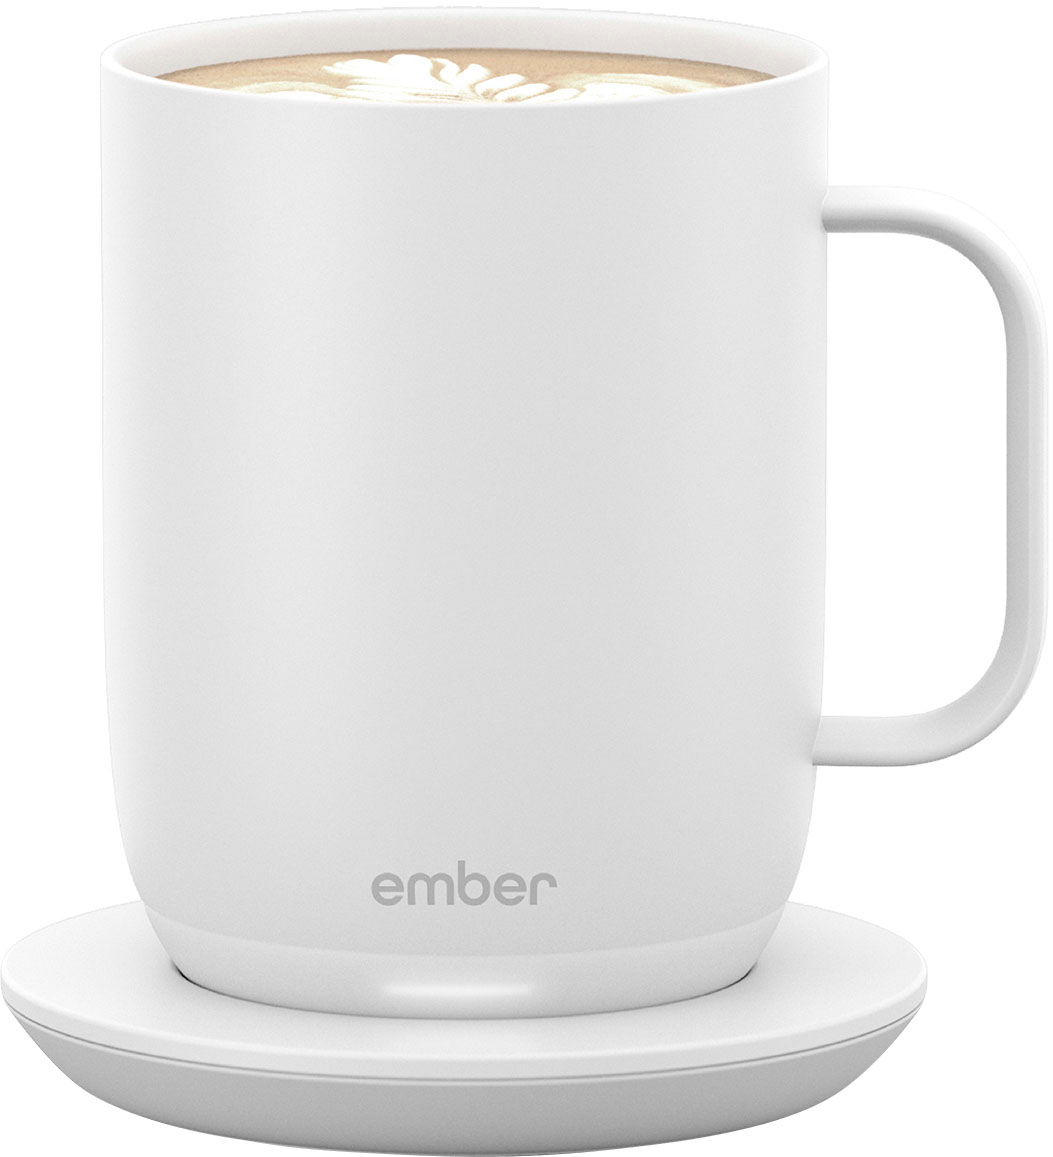 Ember 14 oz. Temperature Control Mug 2 - Apple